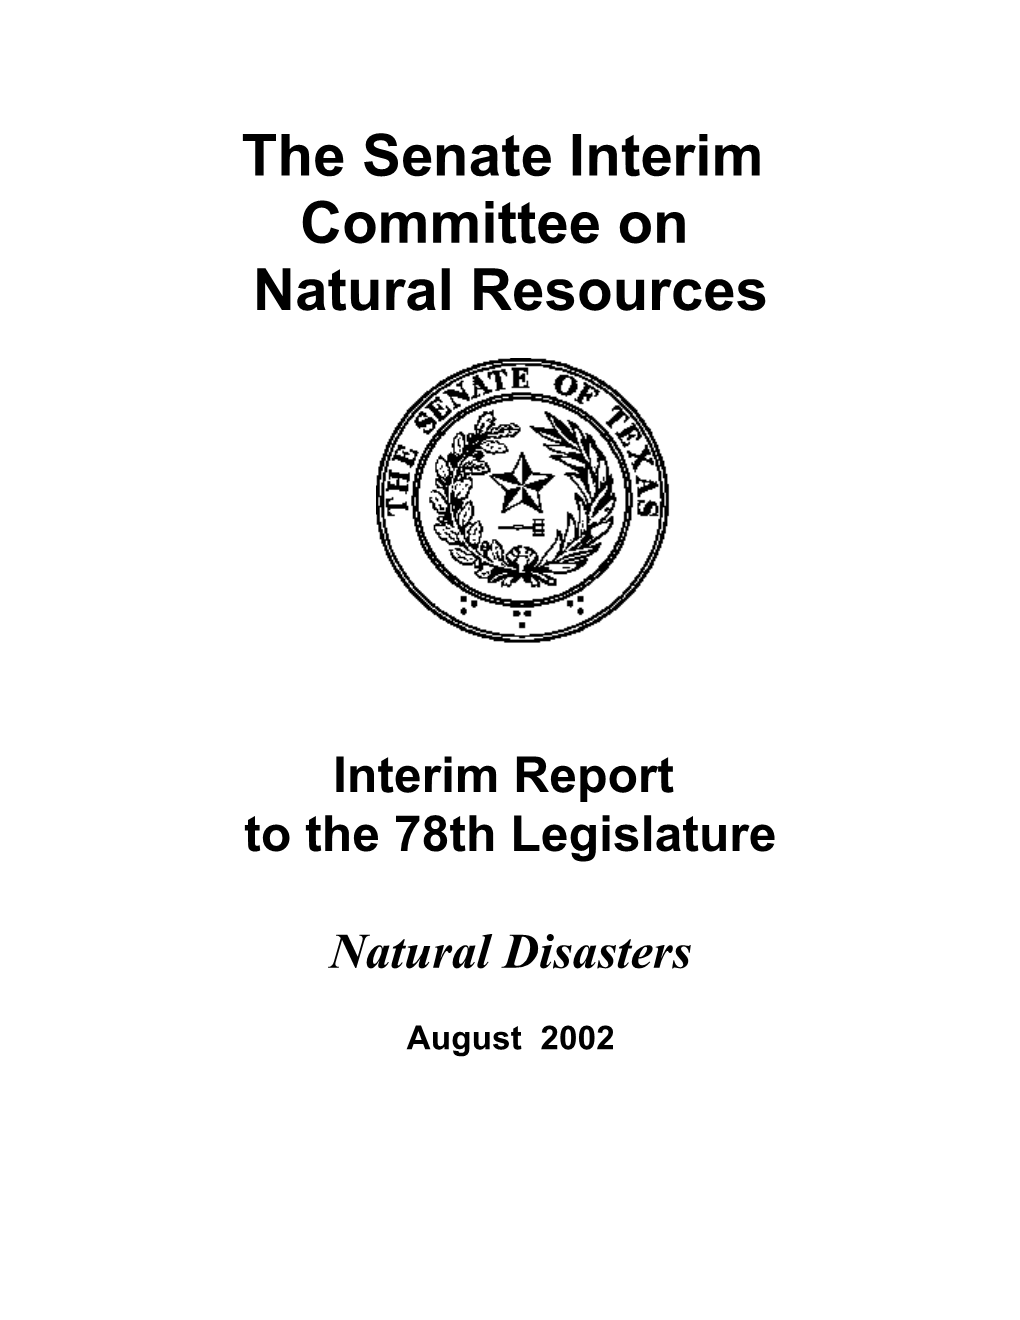 Natural Disaster Final Report